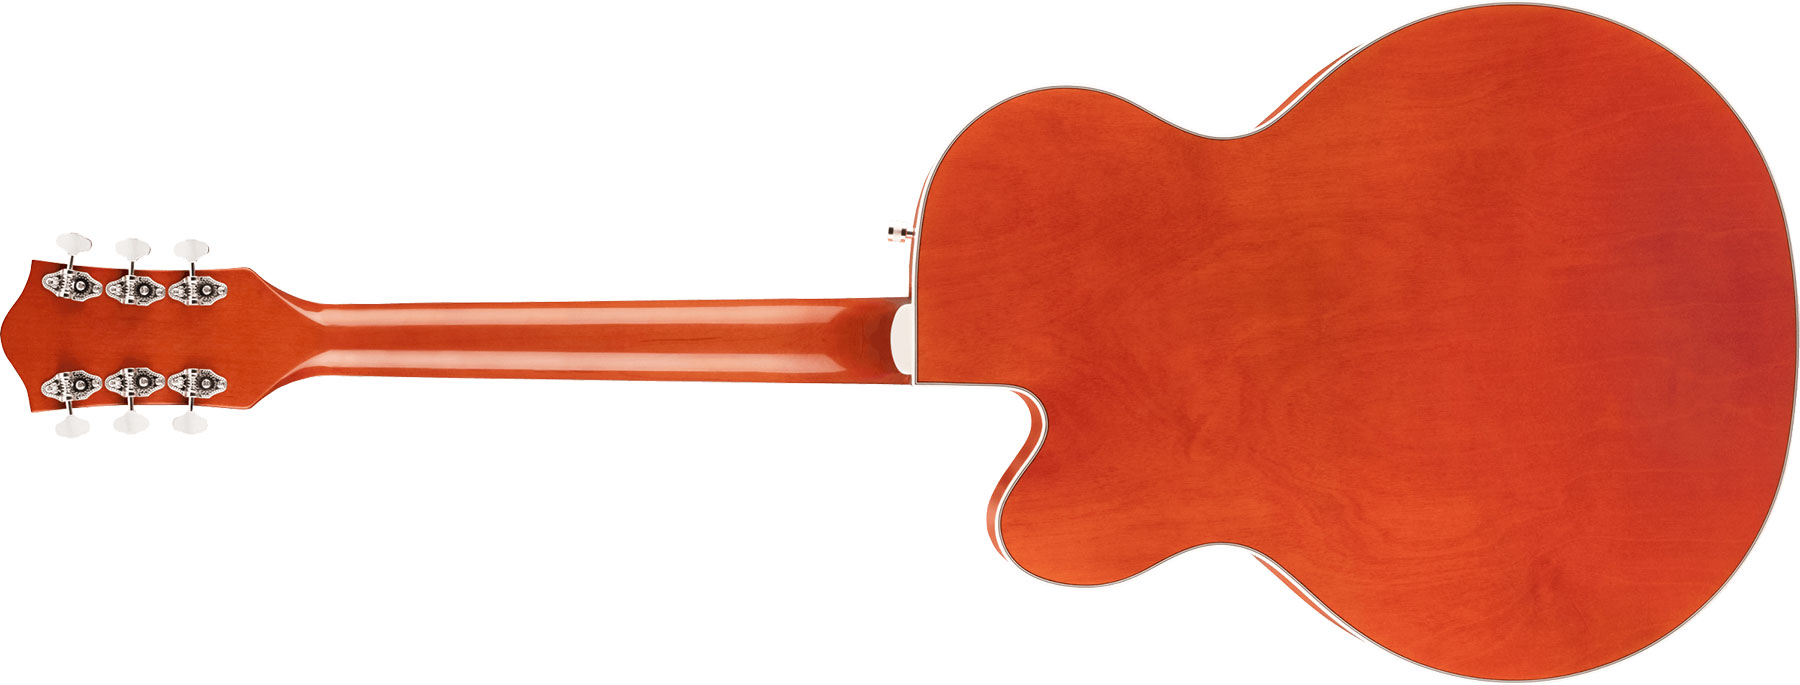 Gretsch G5420t Classic Electromatic Hollow Body Hh Trem Bigsby Lau - Orange Stain - Guitare Électrique 1/2 Caisse - Variation 1